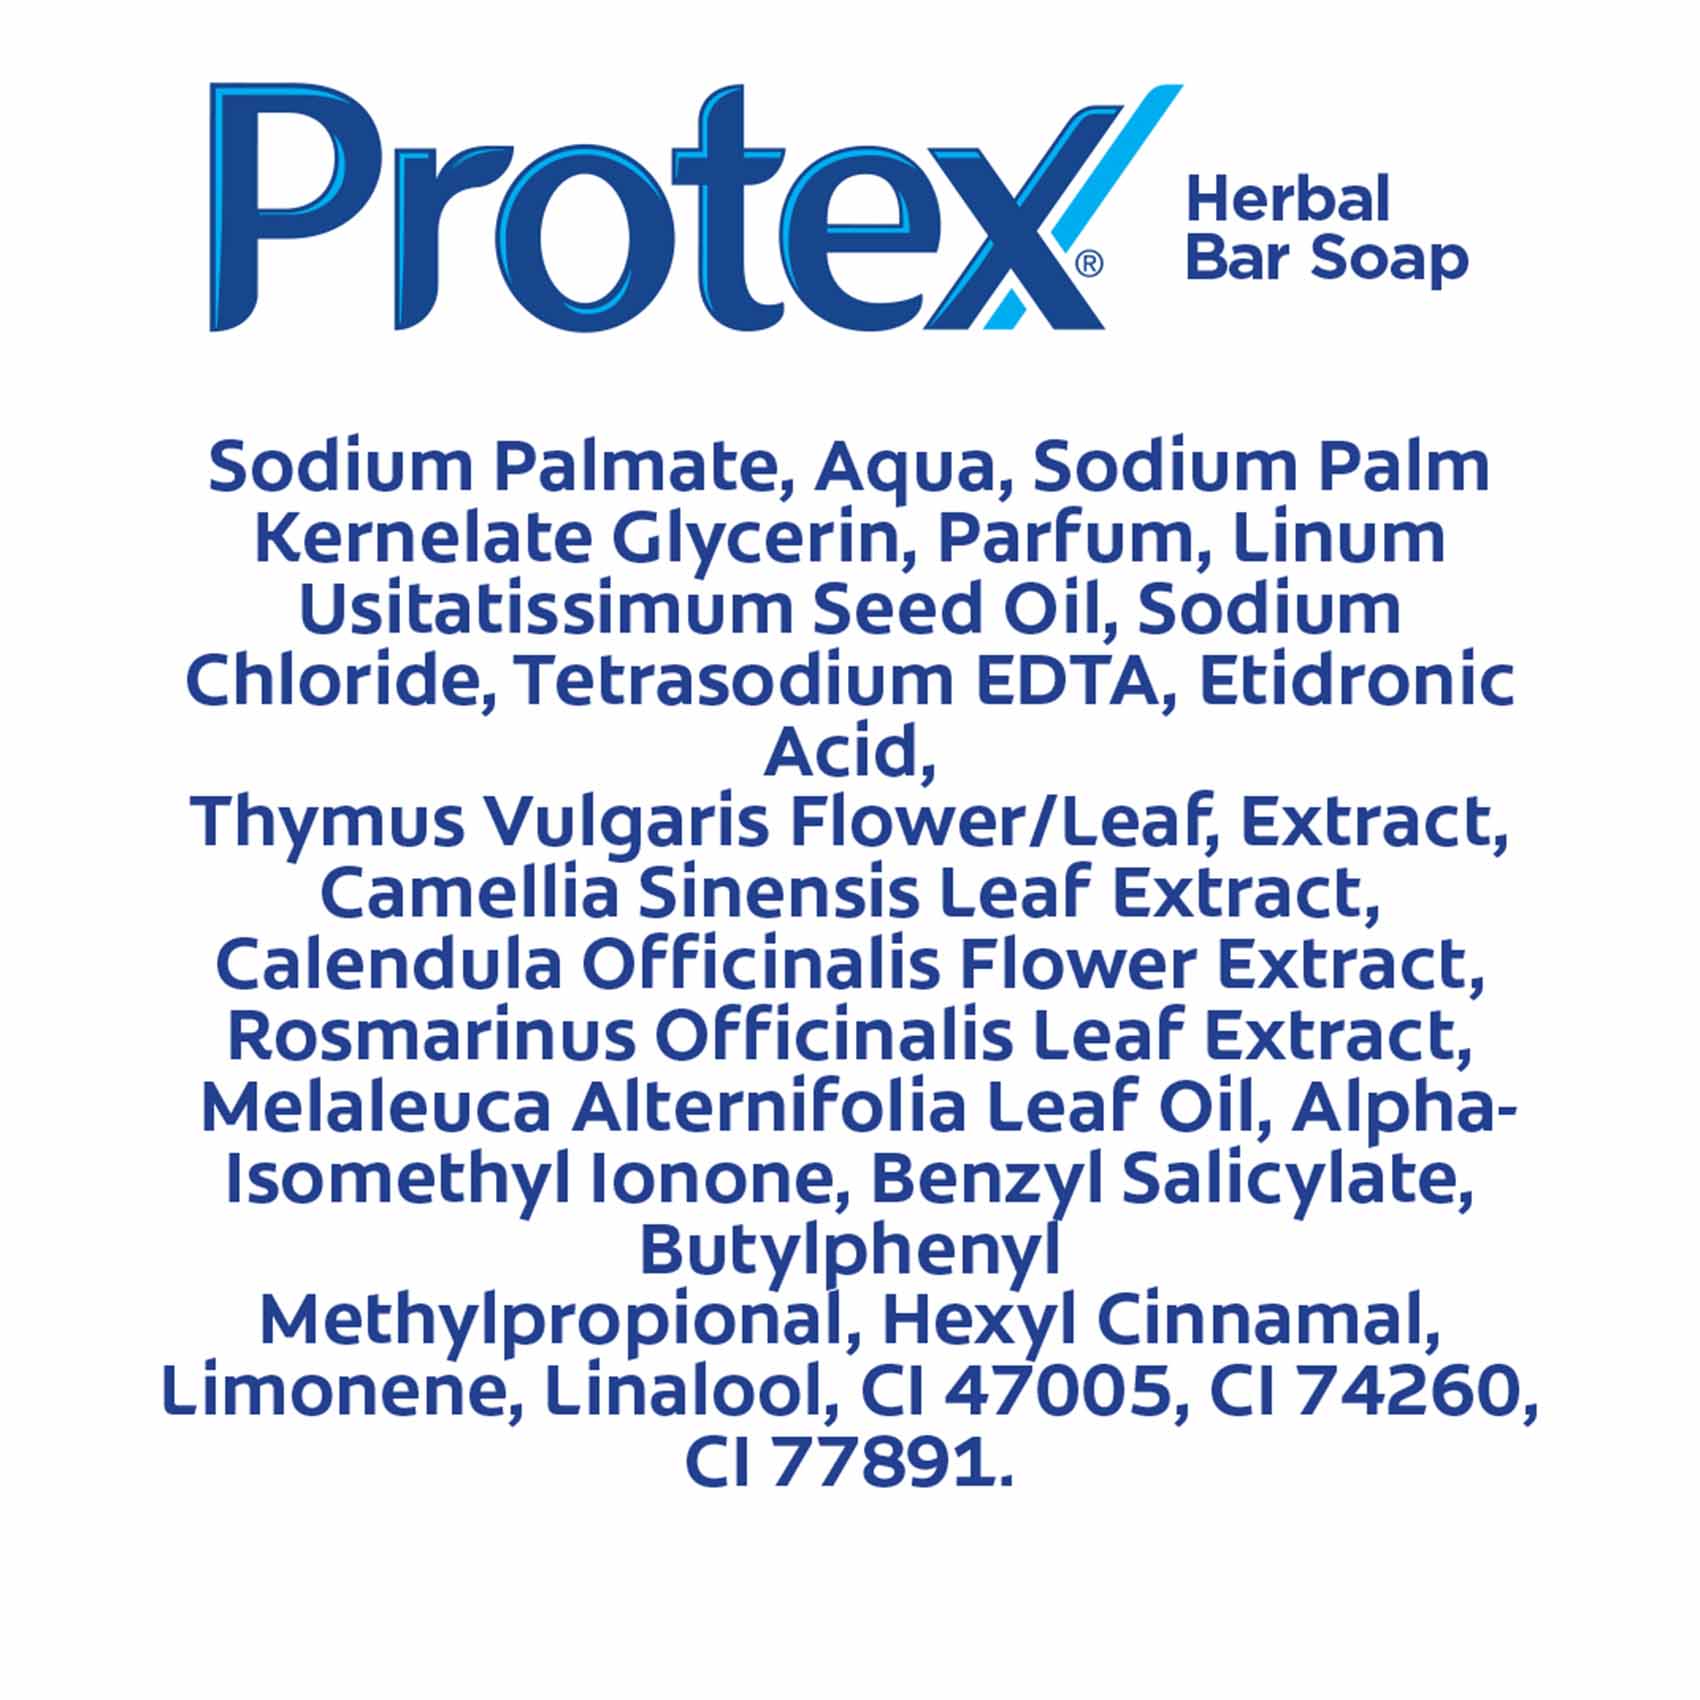 Protex Herbal 3x150g Value Pack Antibacterial Soap